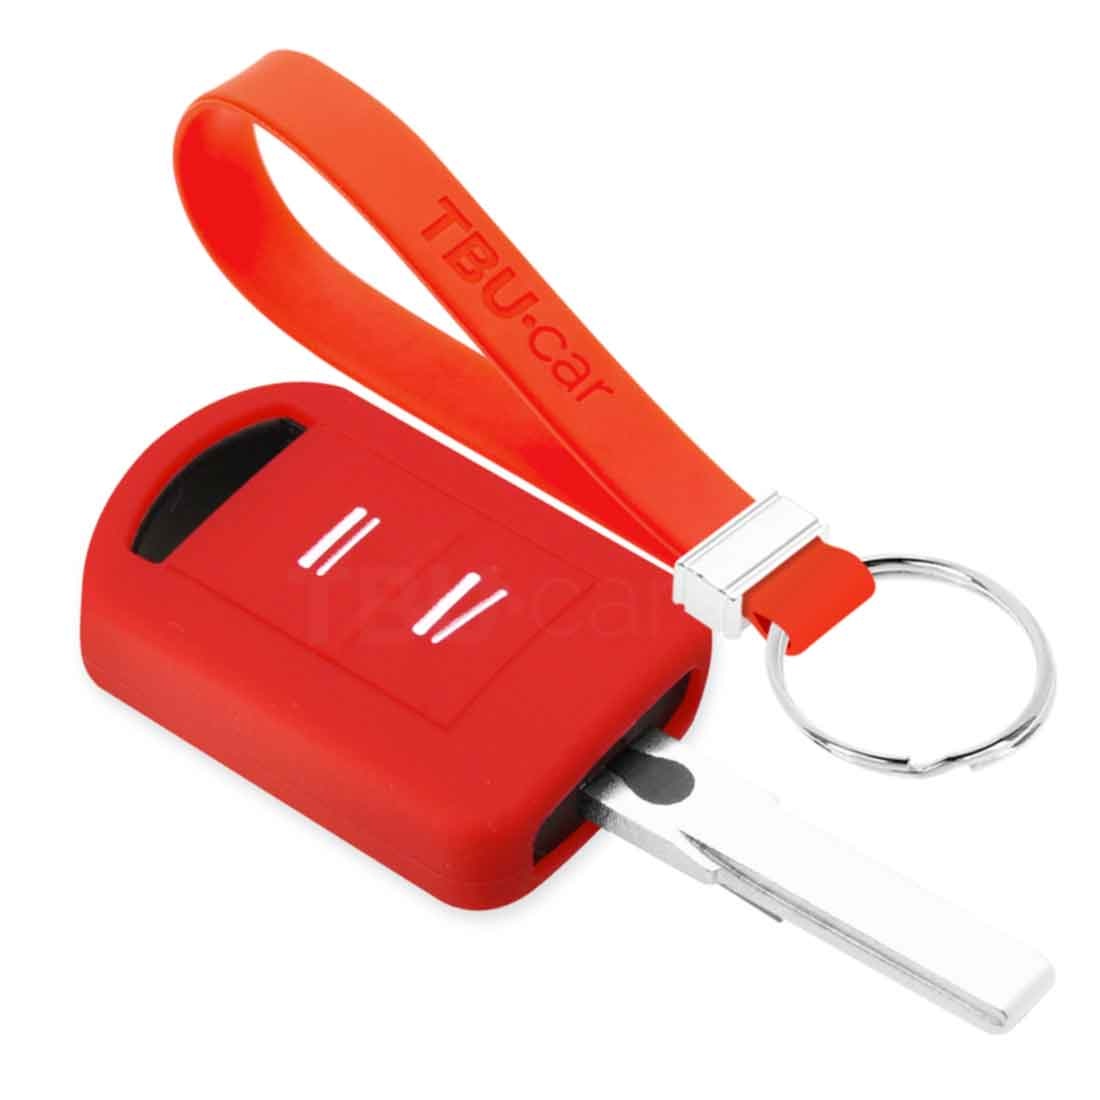 TBU car TBU car Autoschlüssel Hülle kompatibel mit Vauxhall 2 Tasten - Schutzhülle aus Silikon - Auto Schlüsselhülle Cover in Rot